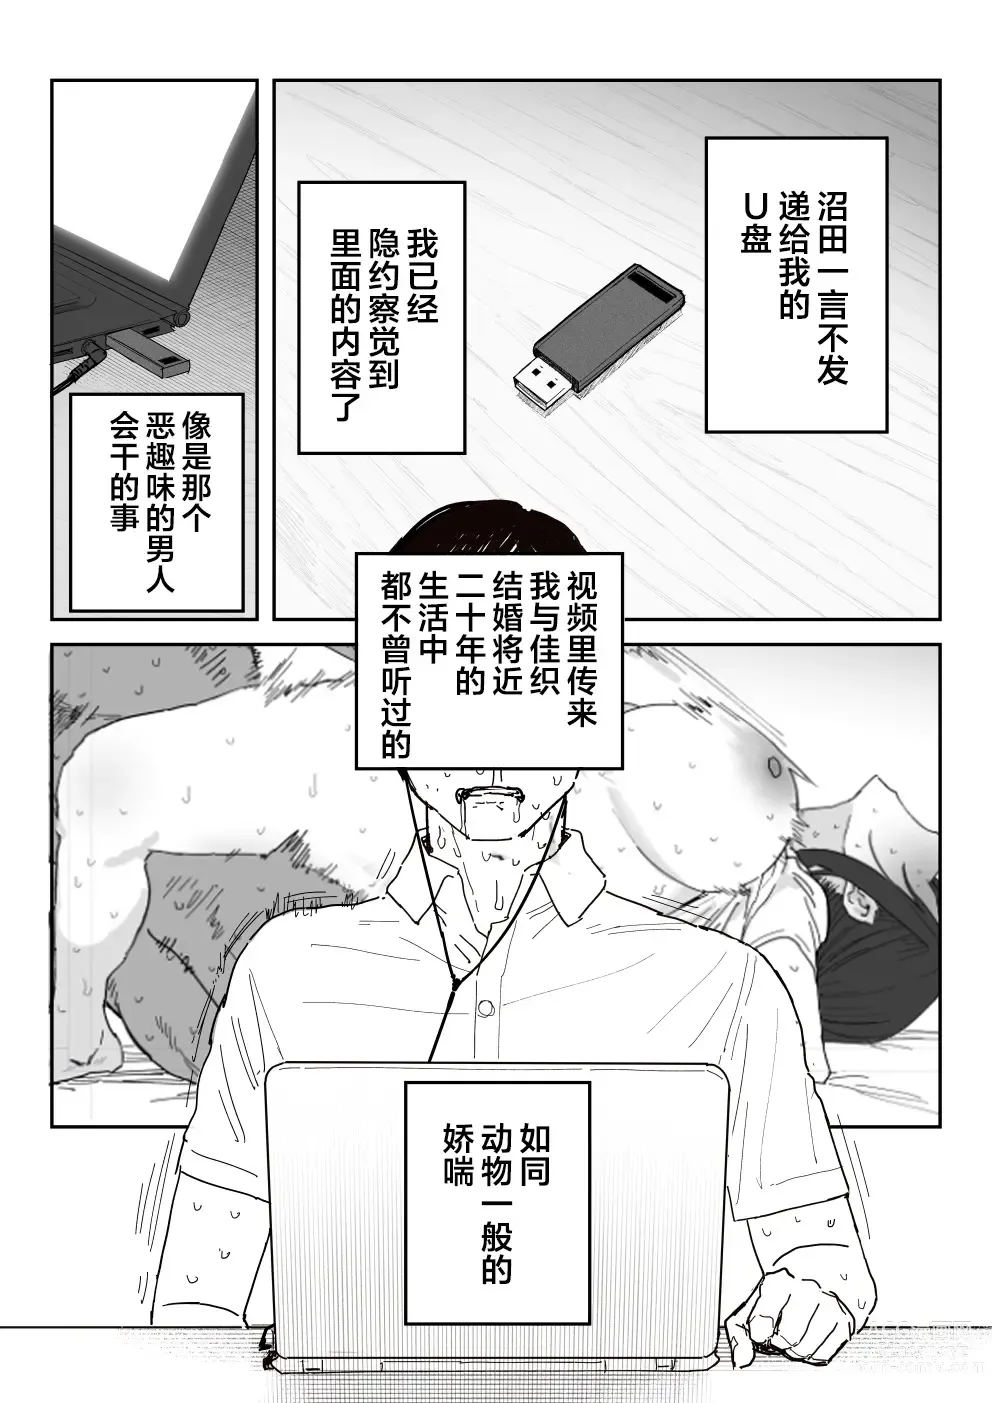 Page 77 of doujinshi 种崎佳织(39岁)代替女儿同人AV出道